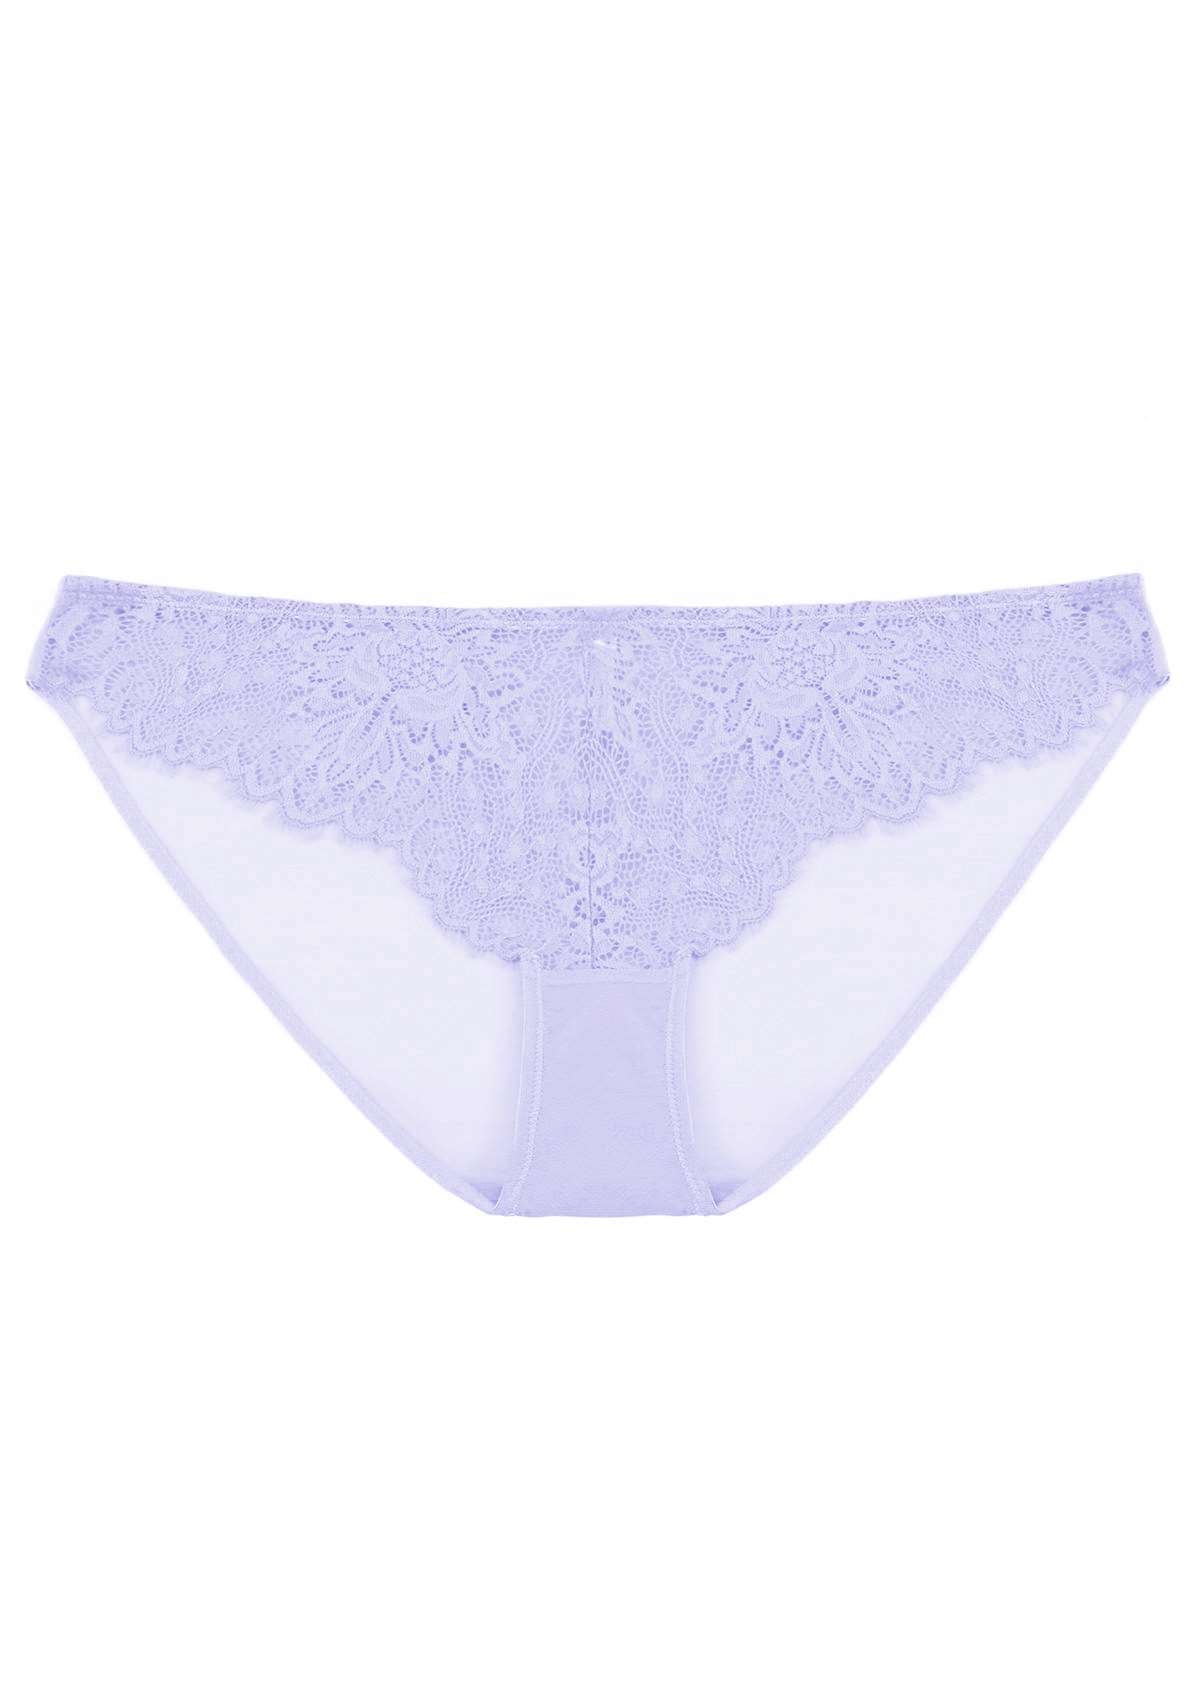 HSIA Sunflower Exquisite Purple Lace Bikini Underwear - XXL / Purple